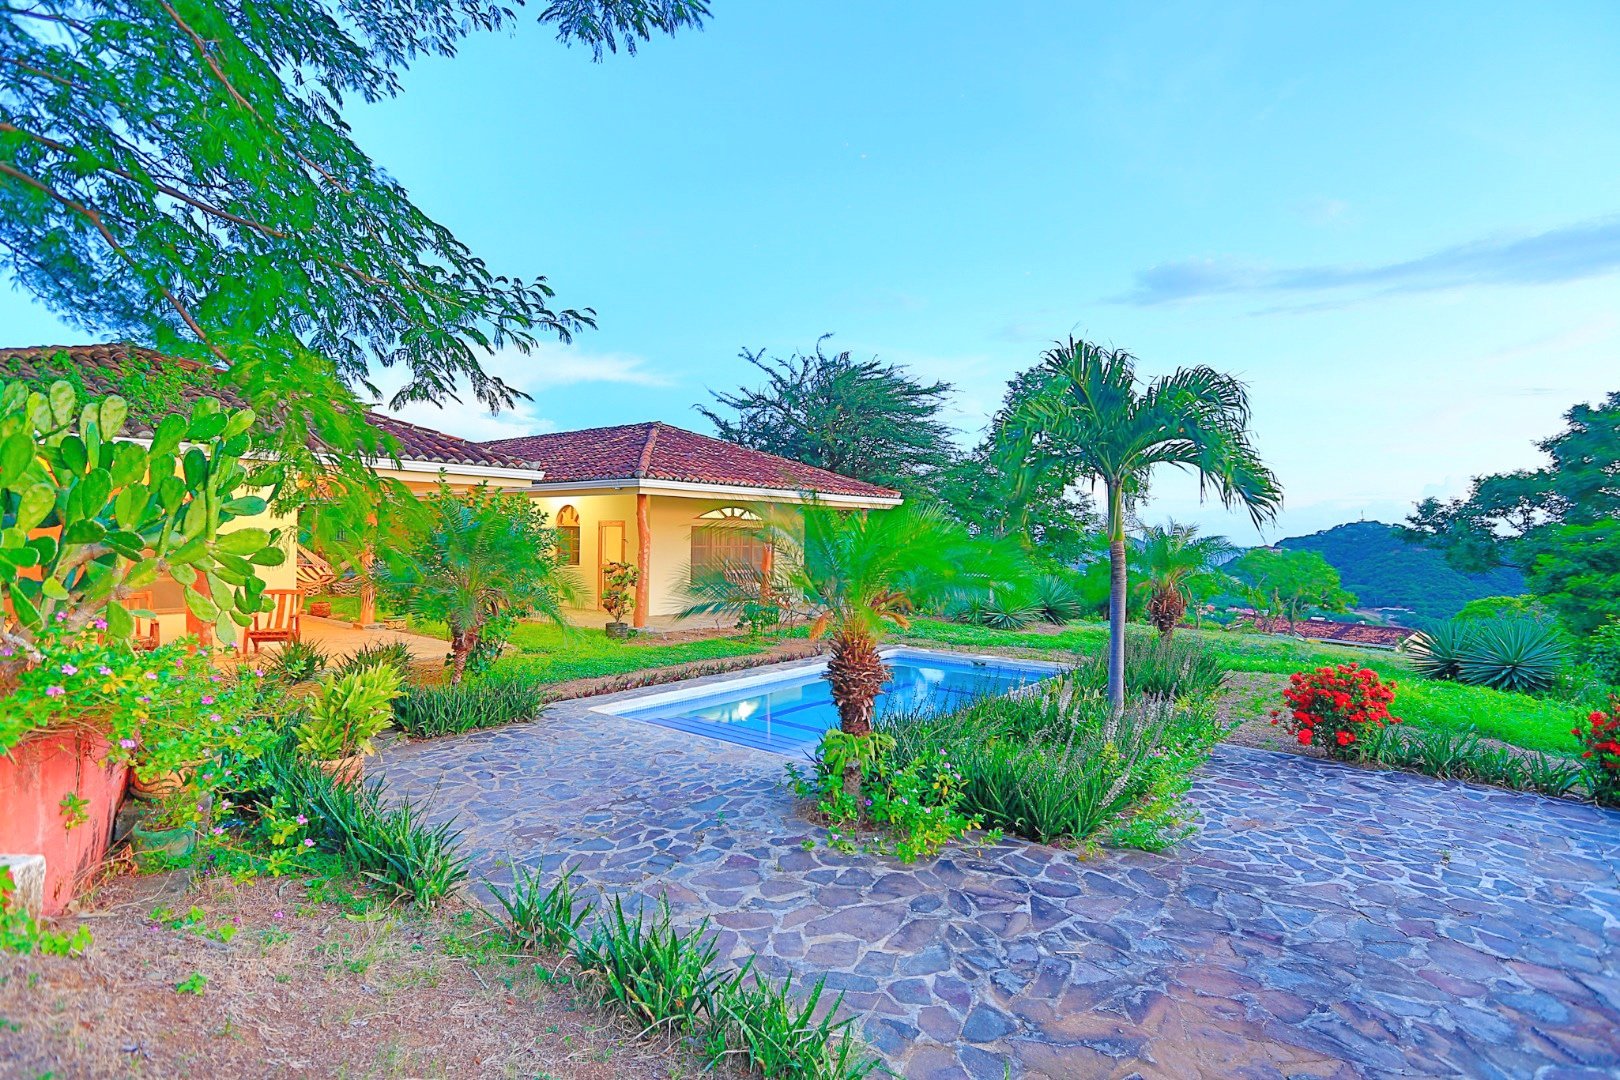 Home House Property for Sale San Juan Del Sur Nicaragua 1.jpg